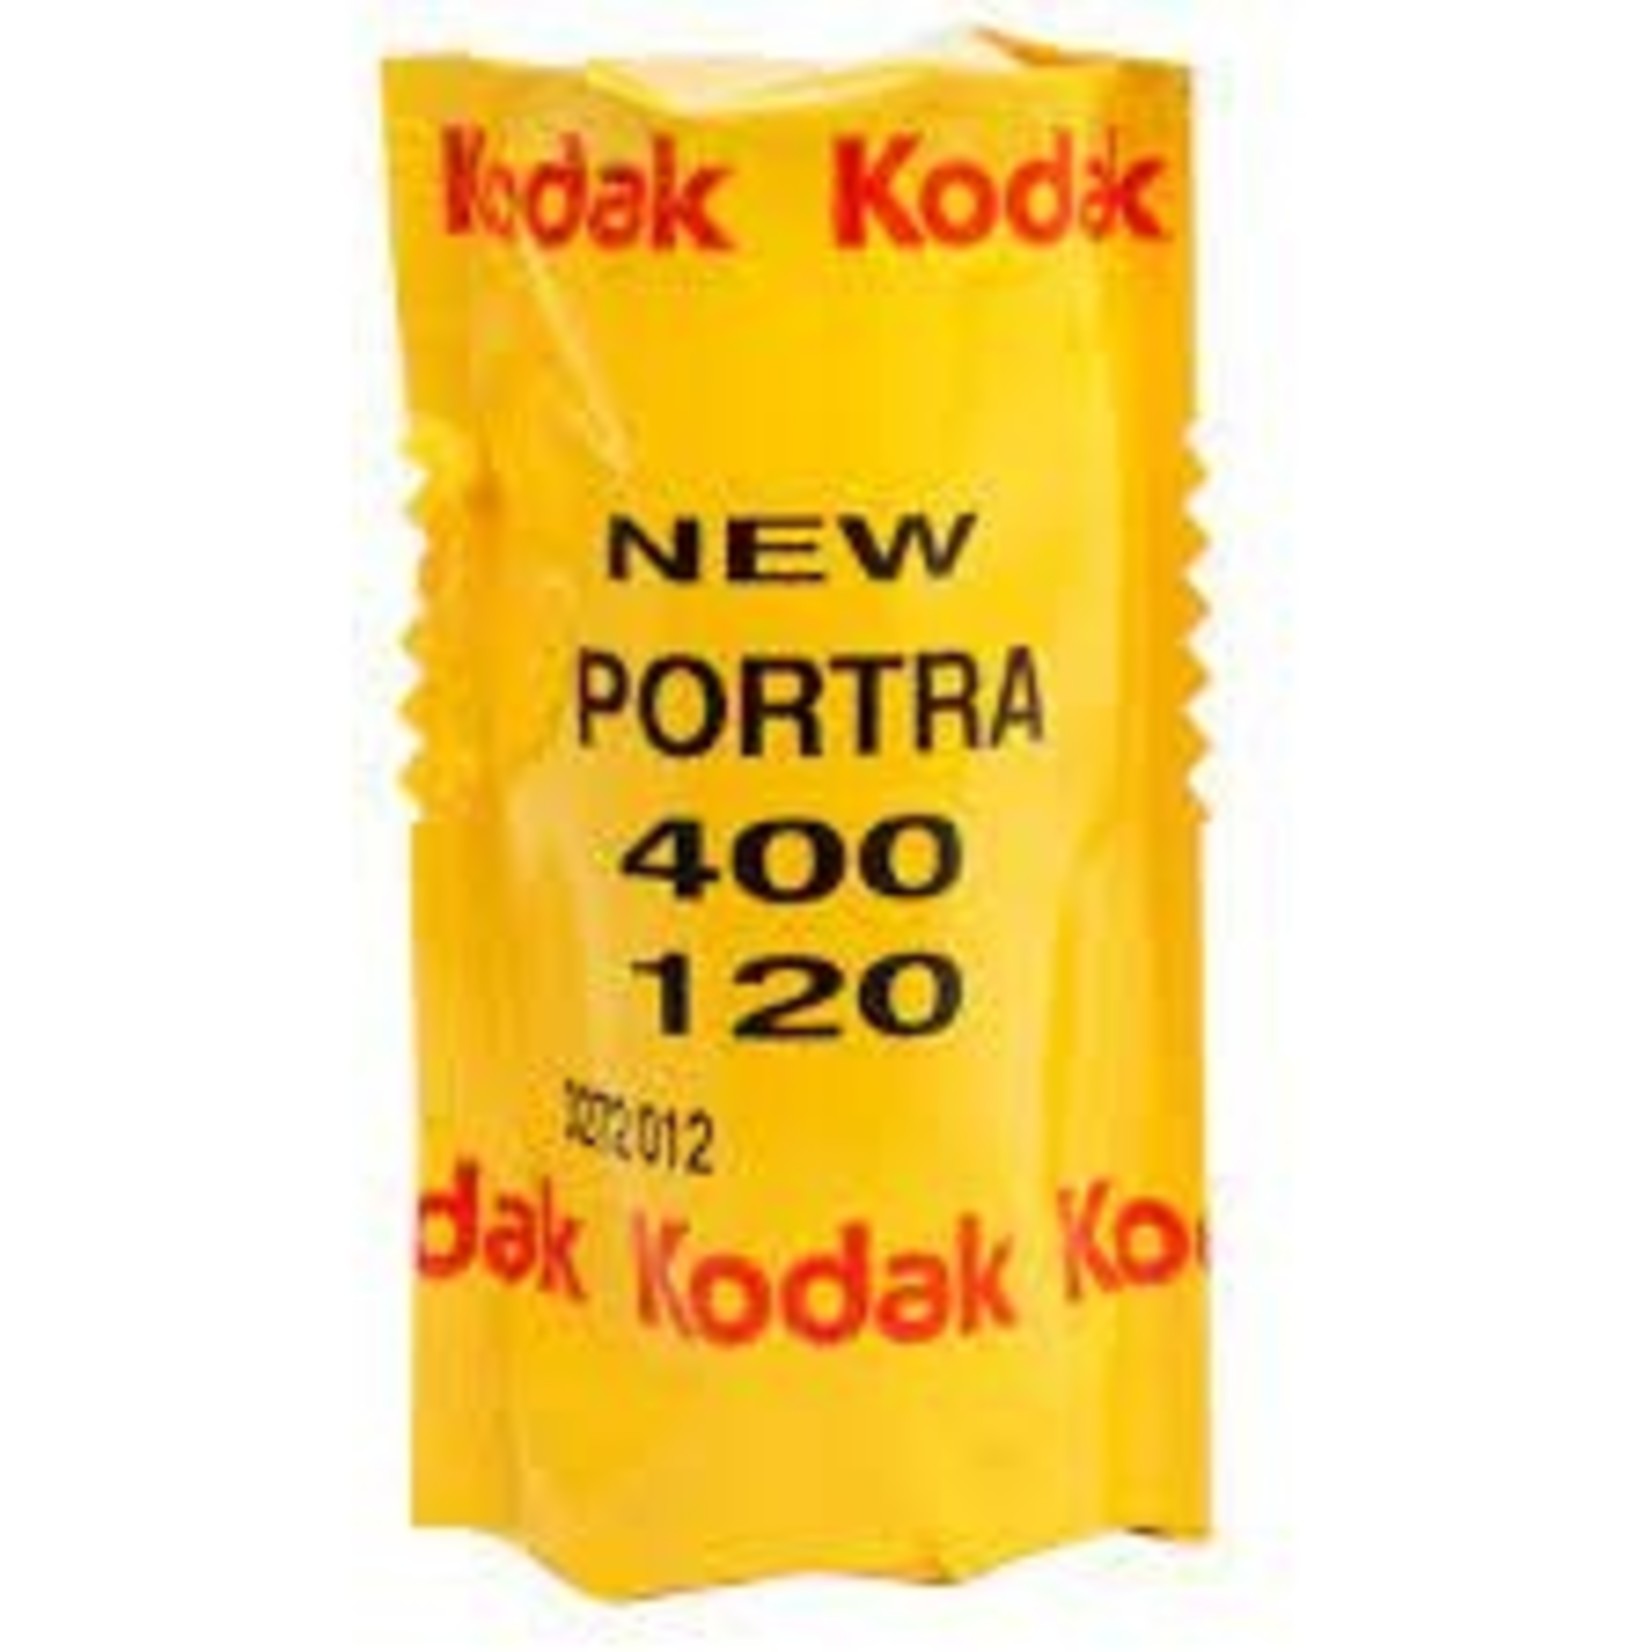 Kodak Kodak Professional Portra 400 Color Negative Film 120 Roll Film